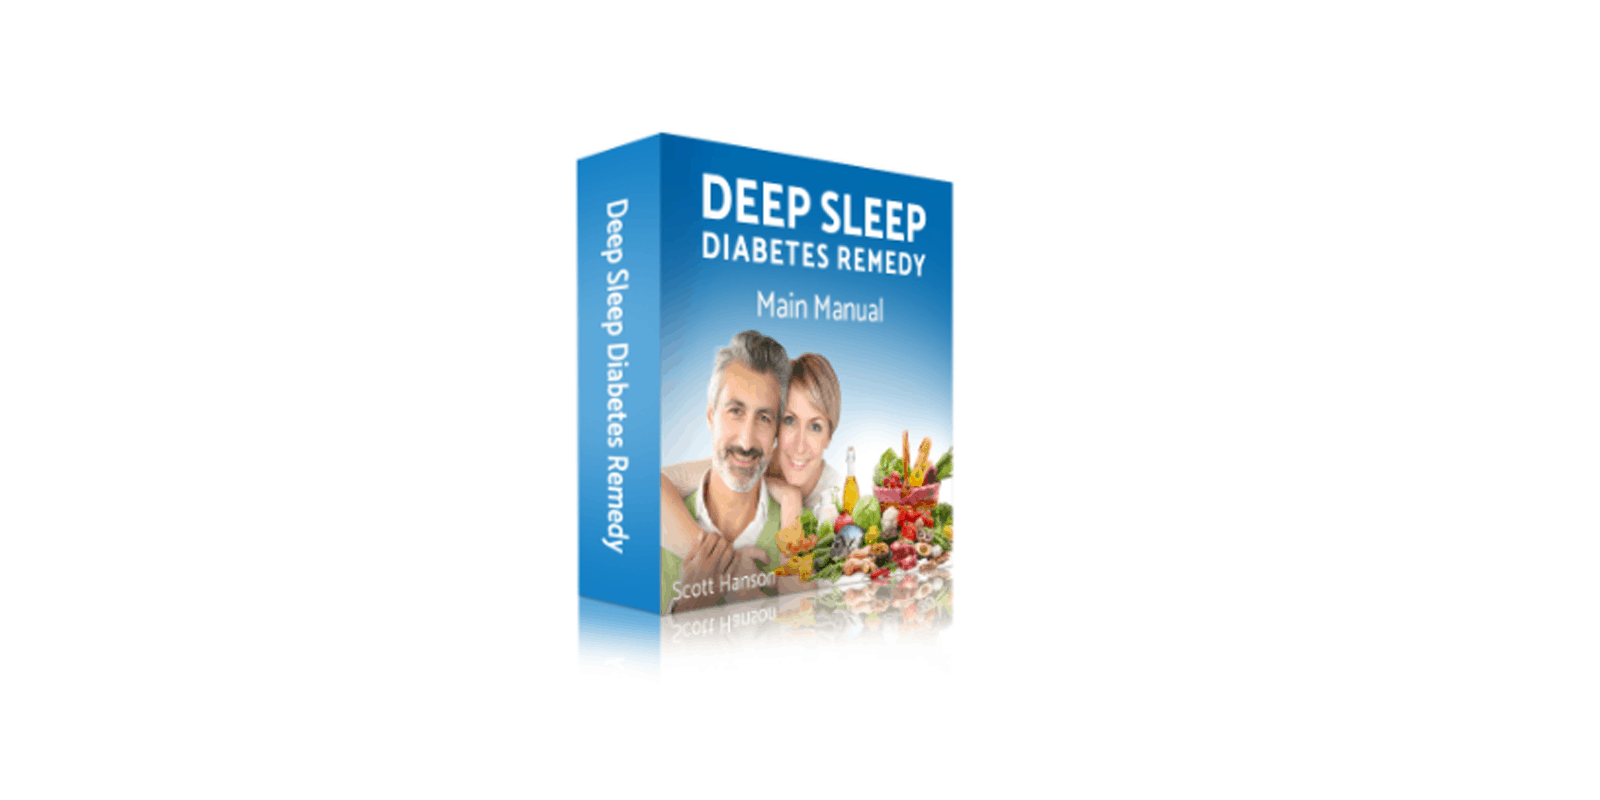 Deep Sleep Diabetes Remedy Review 